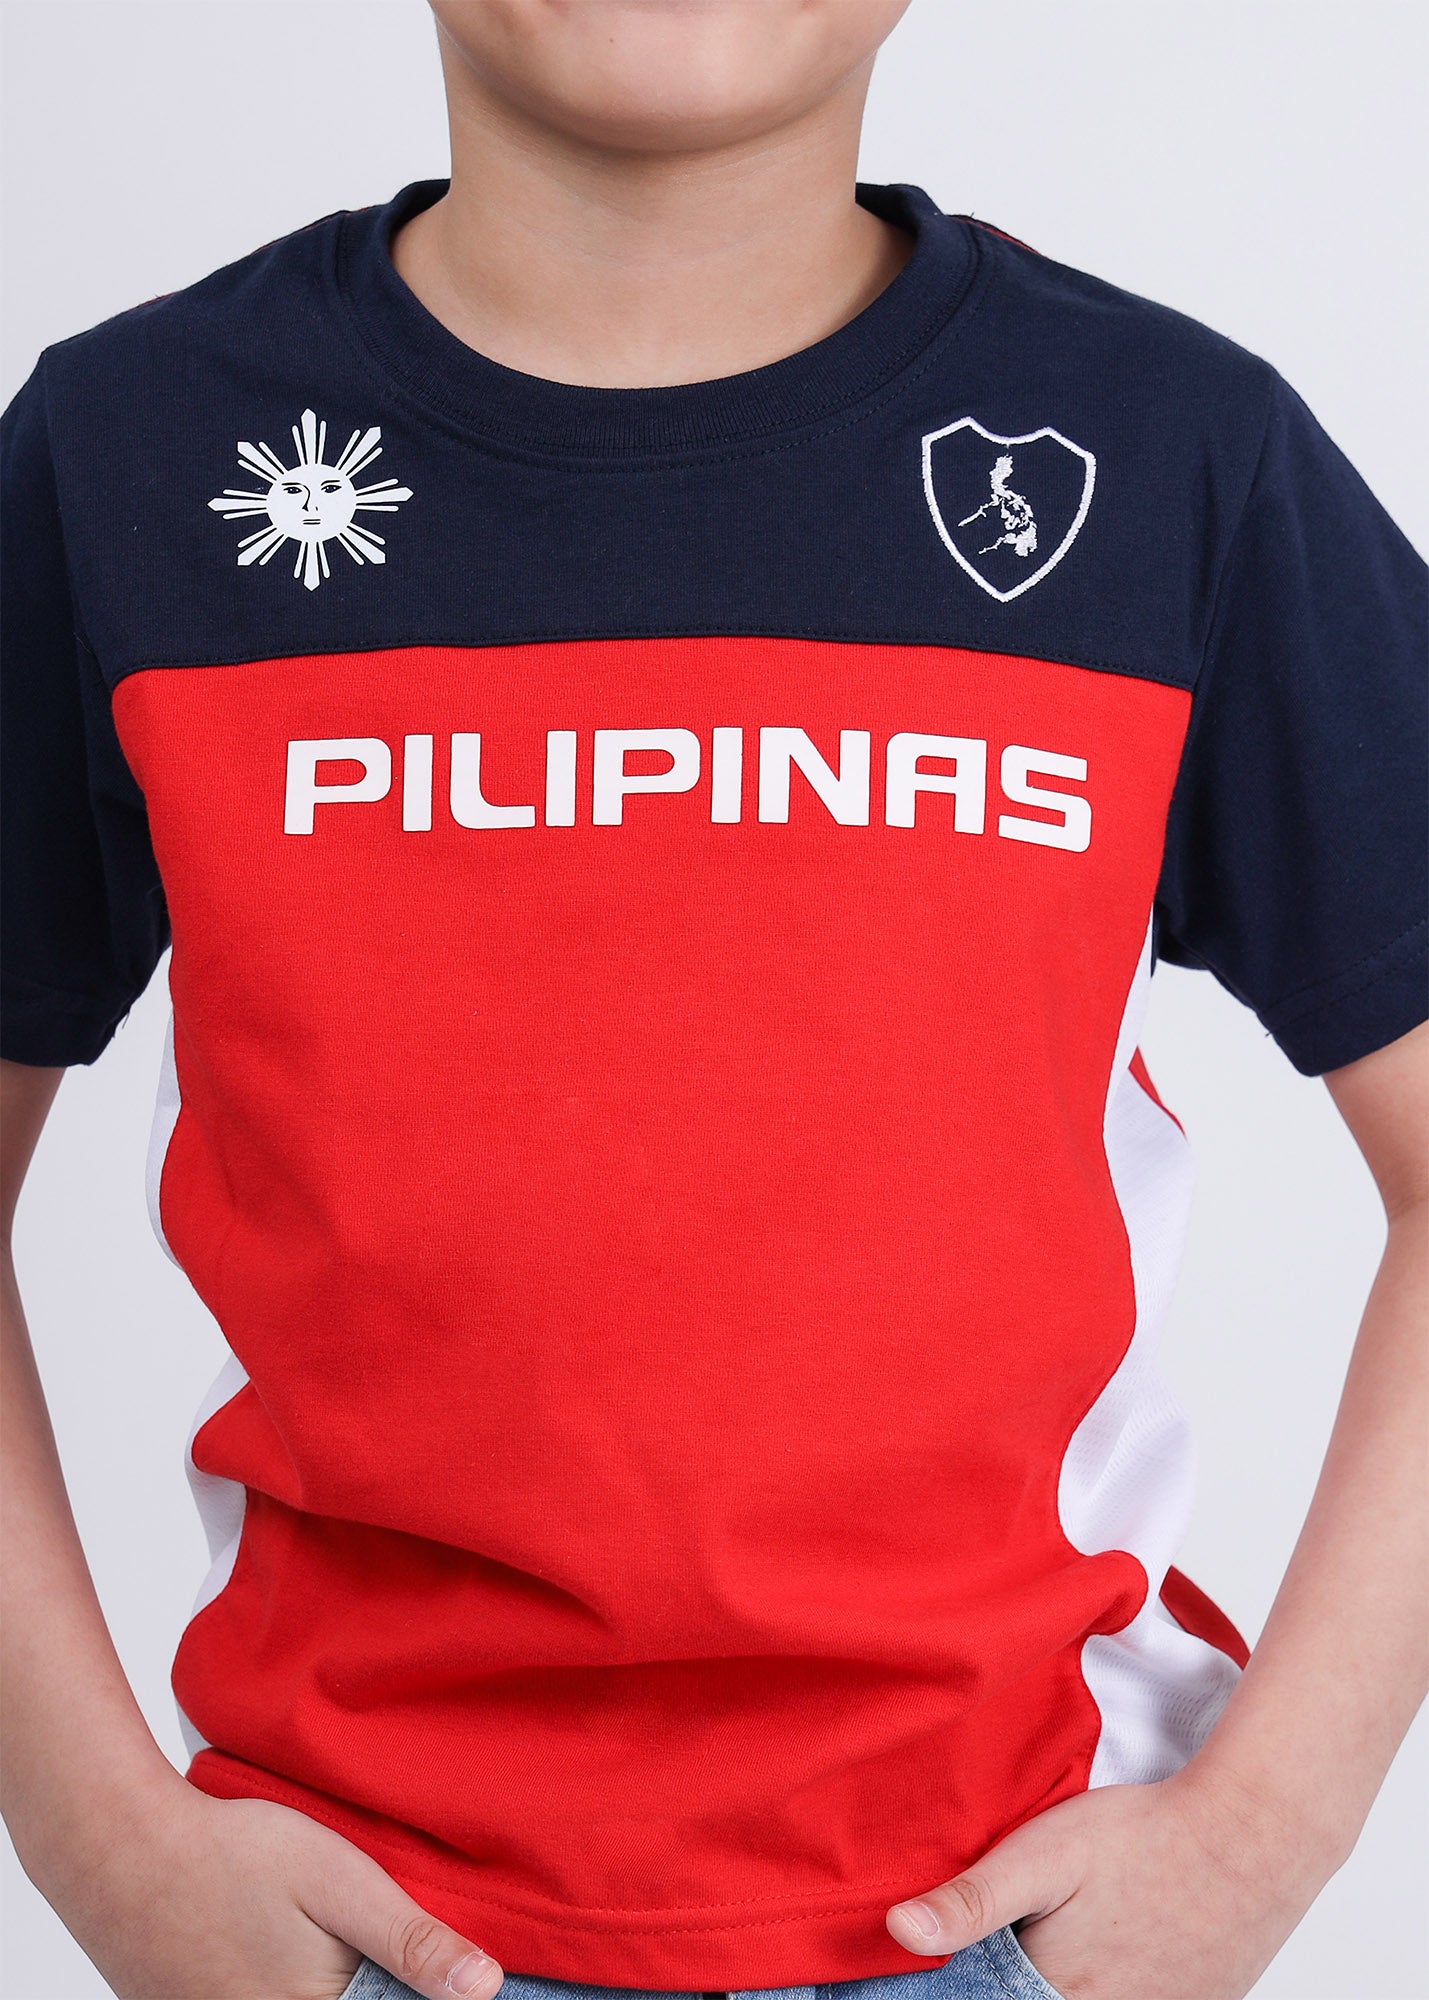 Pilipinas Retro T-shirt for Kids